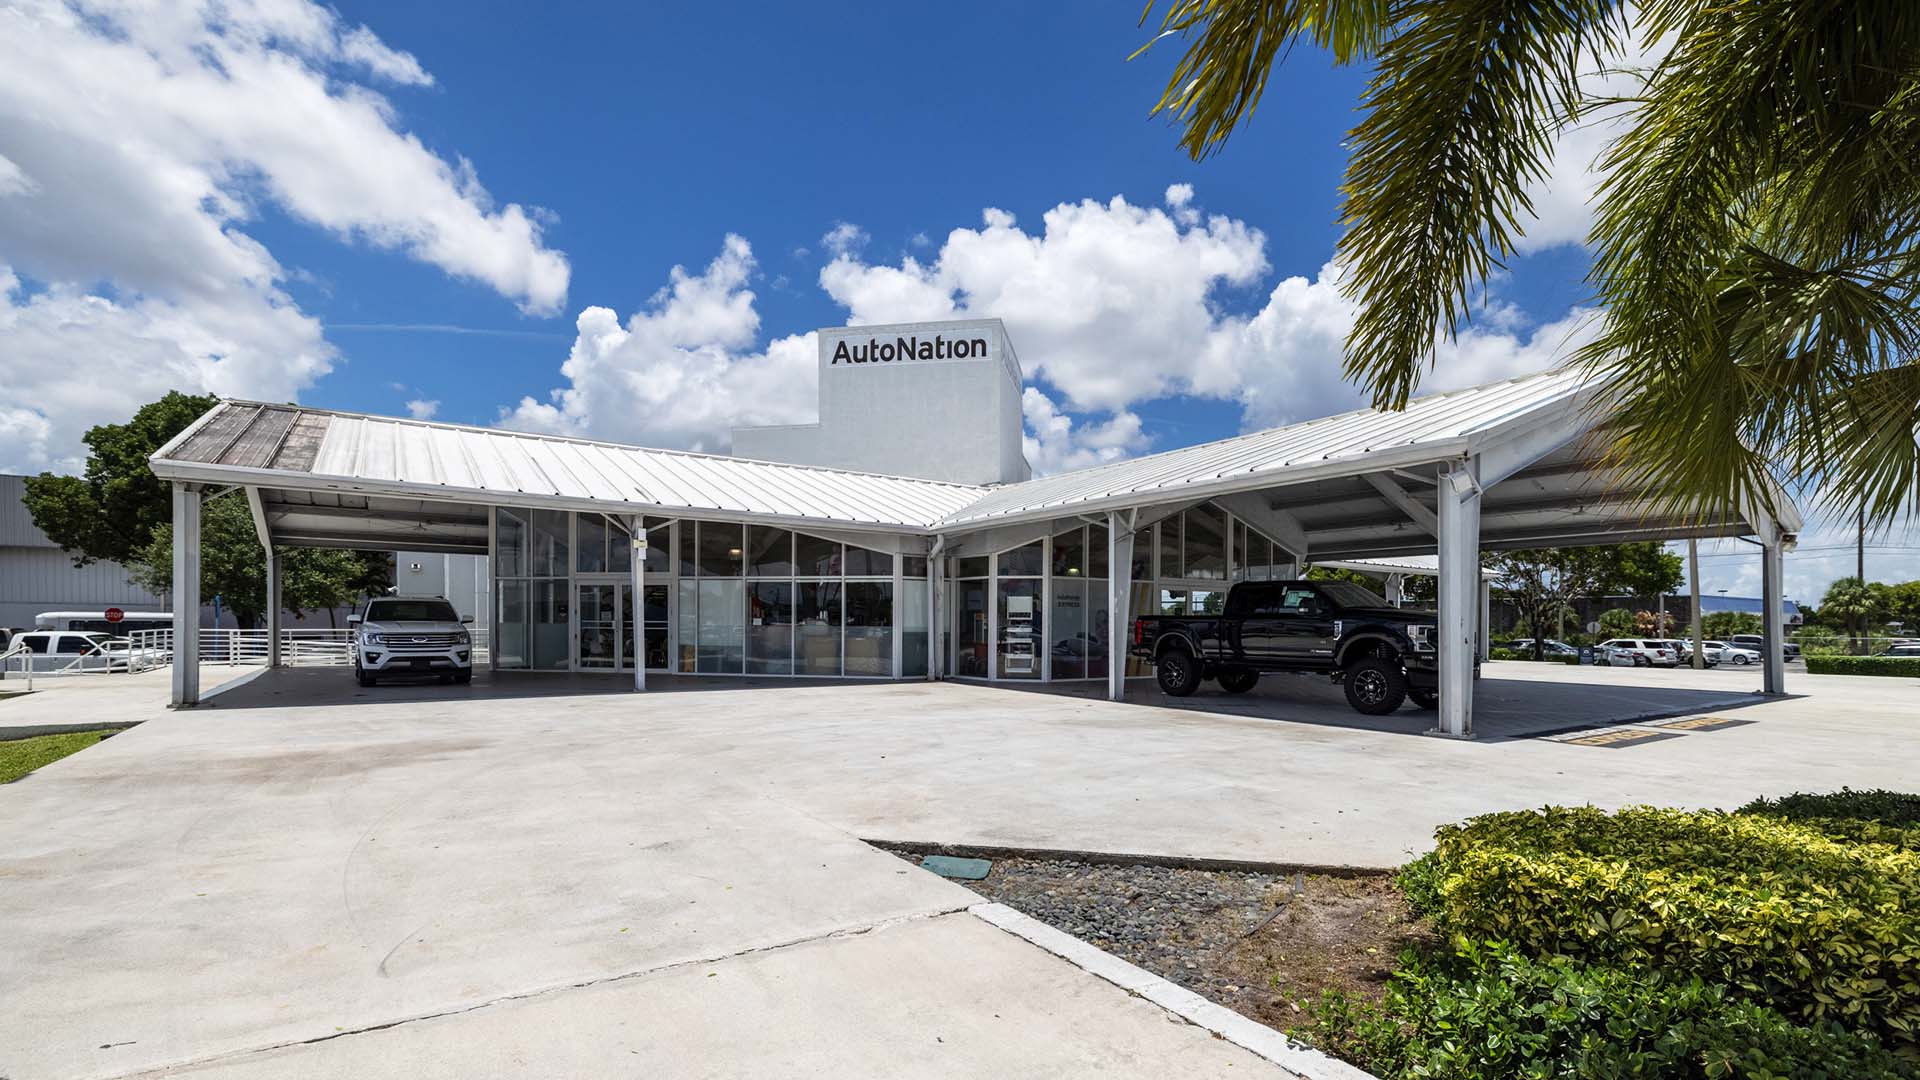 Exterior view of AutoNation Ford Miami